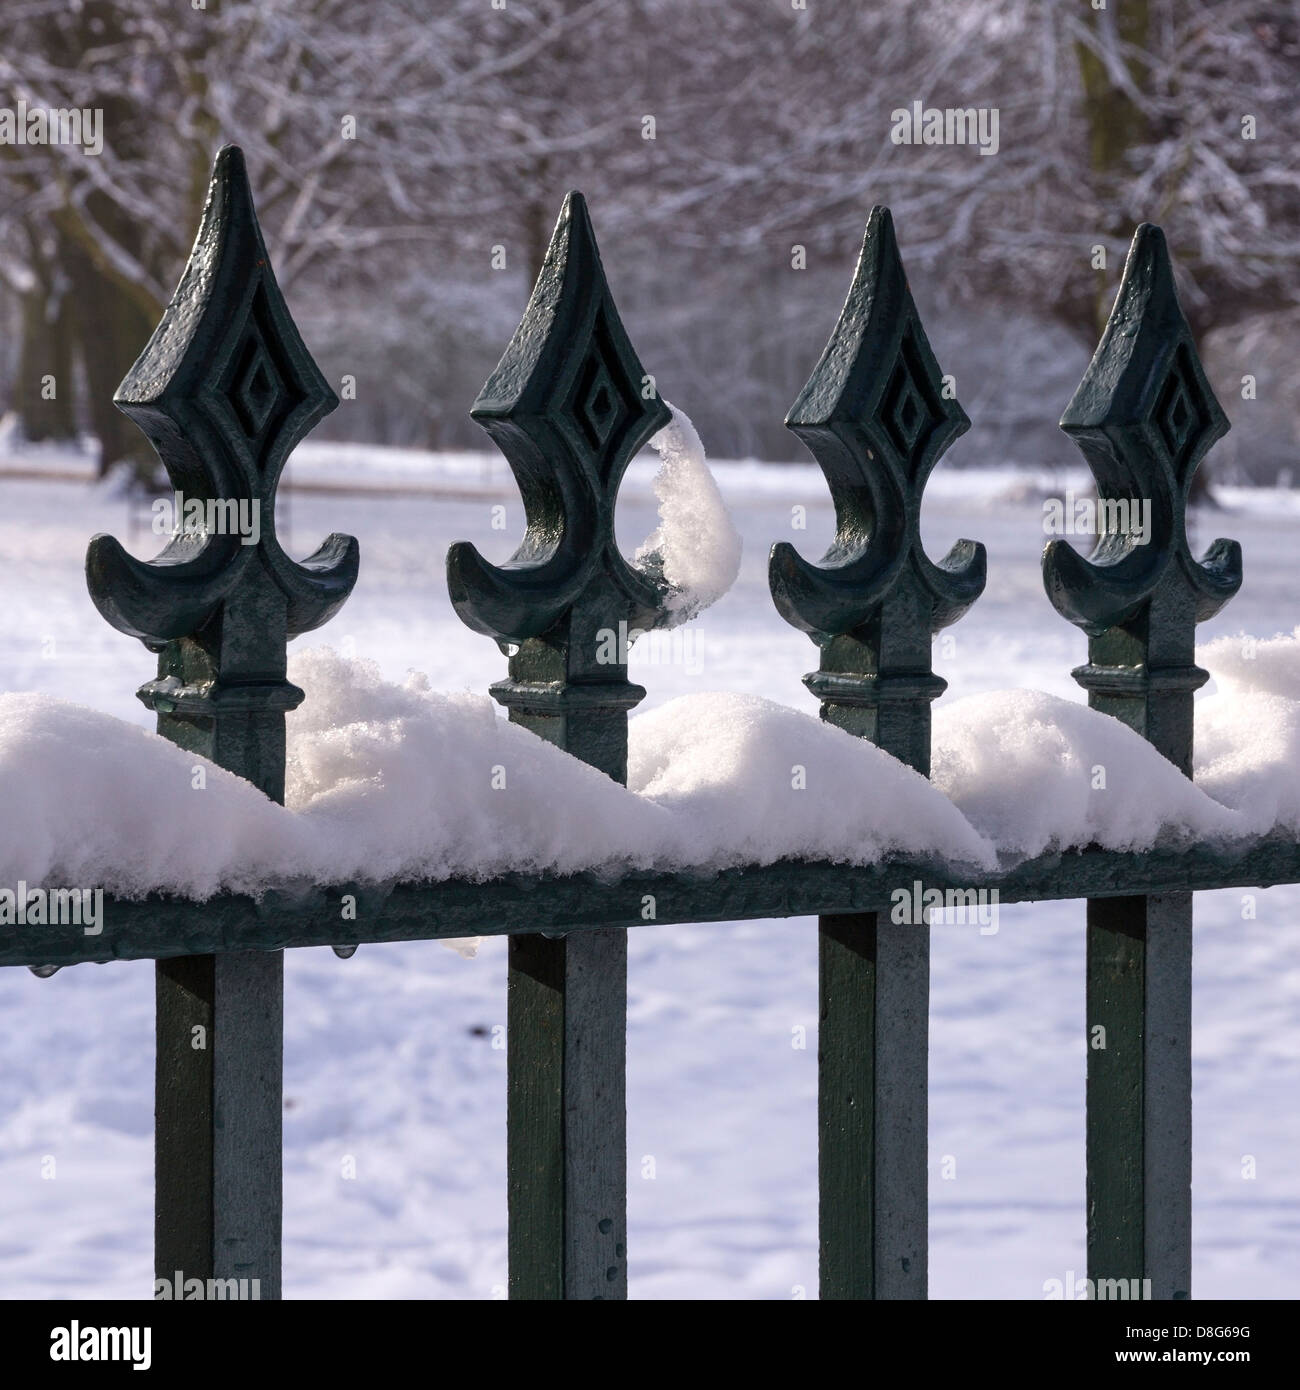 Snowy valla metálica de hierro barandas con topes, REINO UNIDO Foto de stock